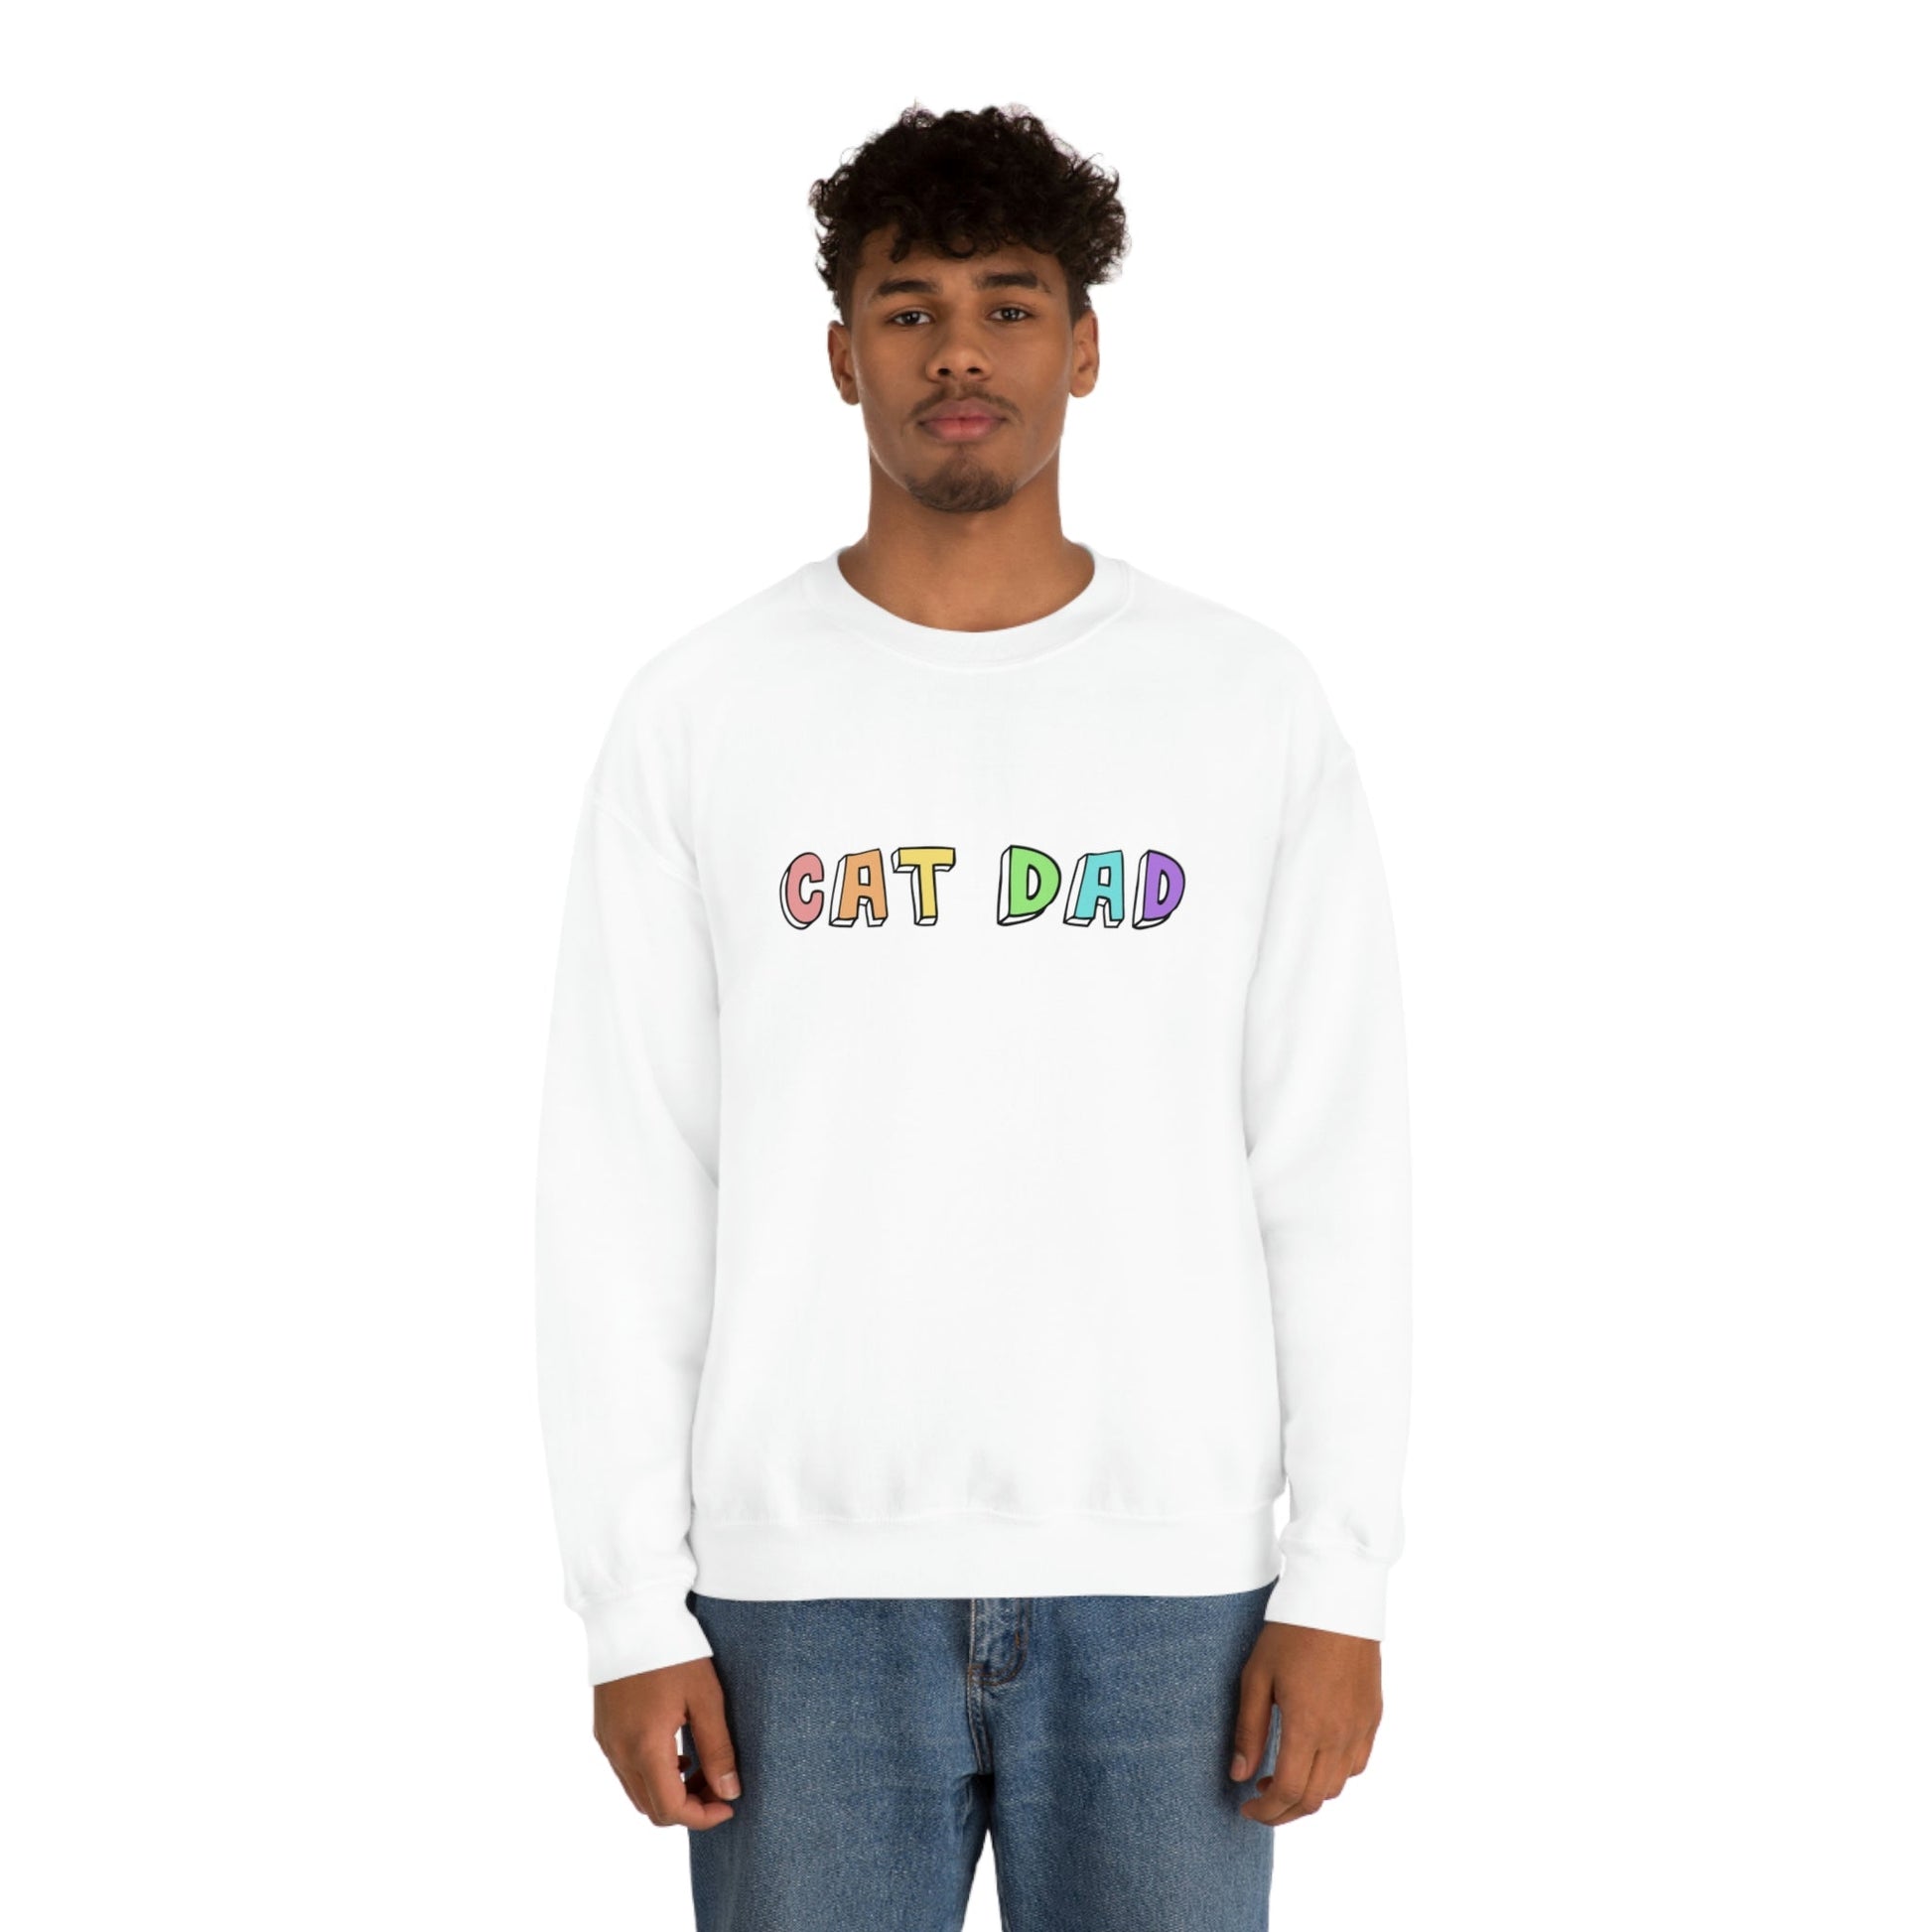 Cat Dad | Crewneck Sweatshirt - Detezi Designs-43343034896040783992